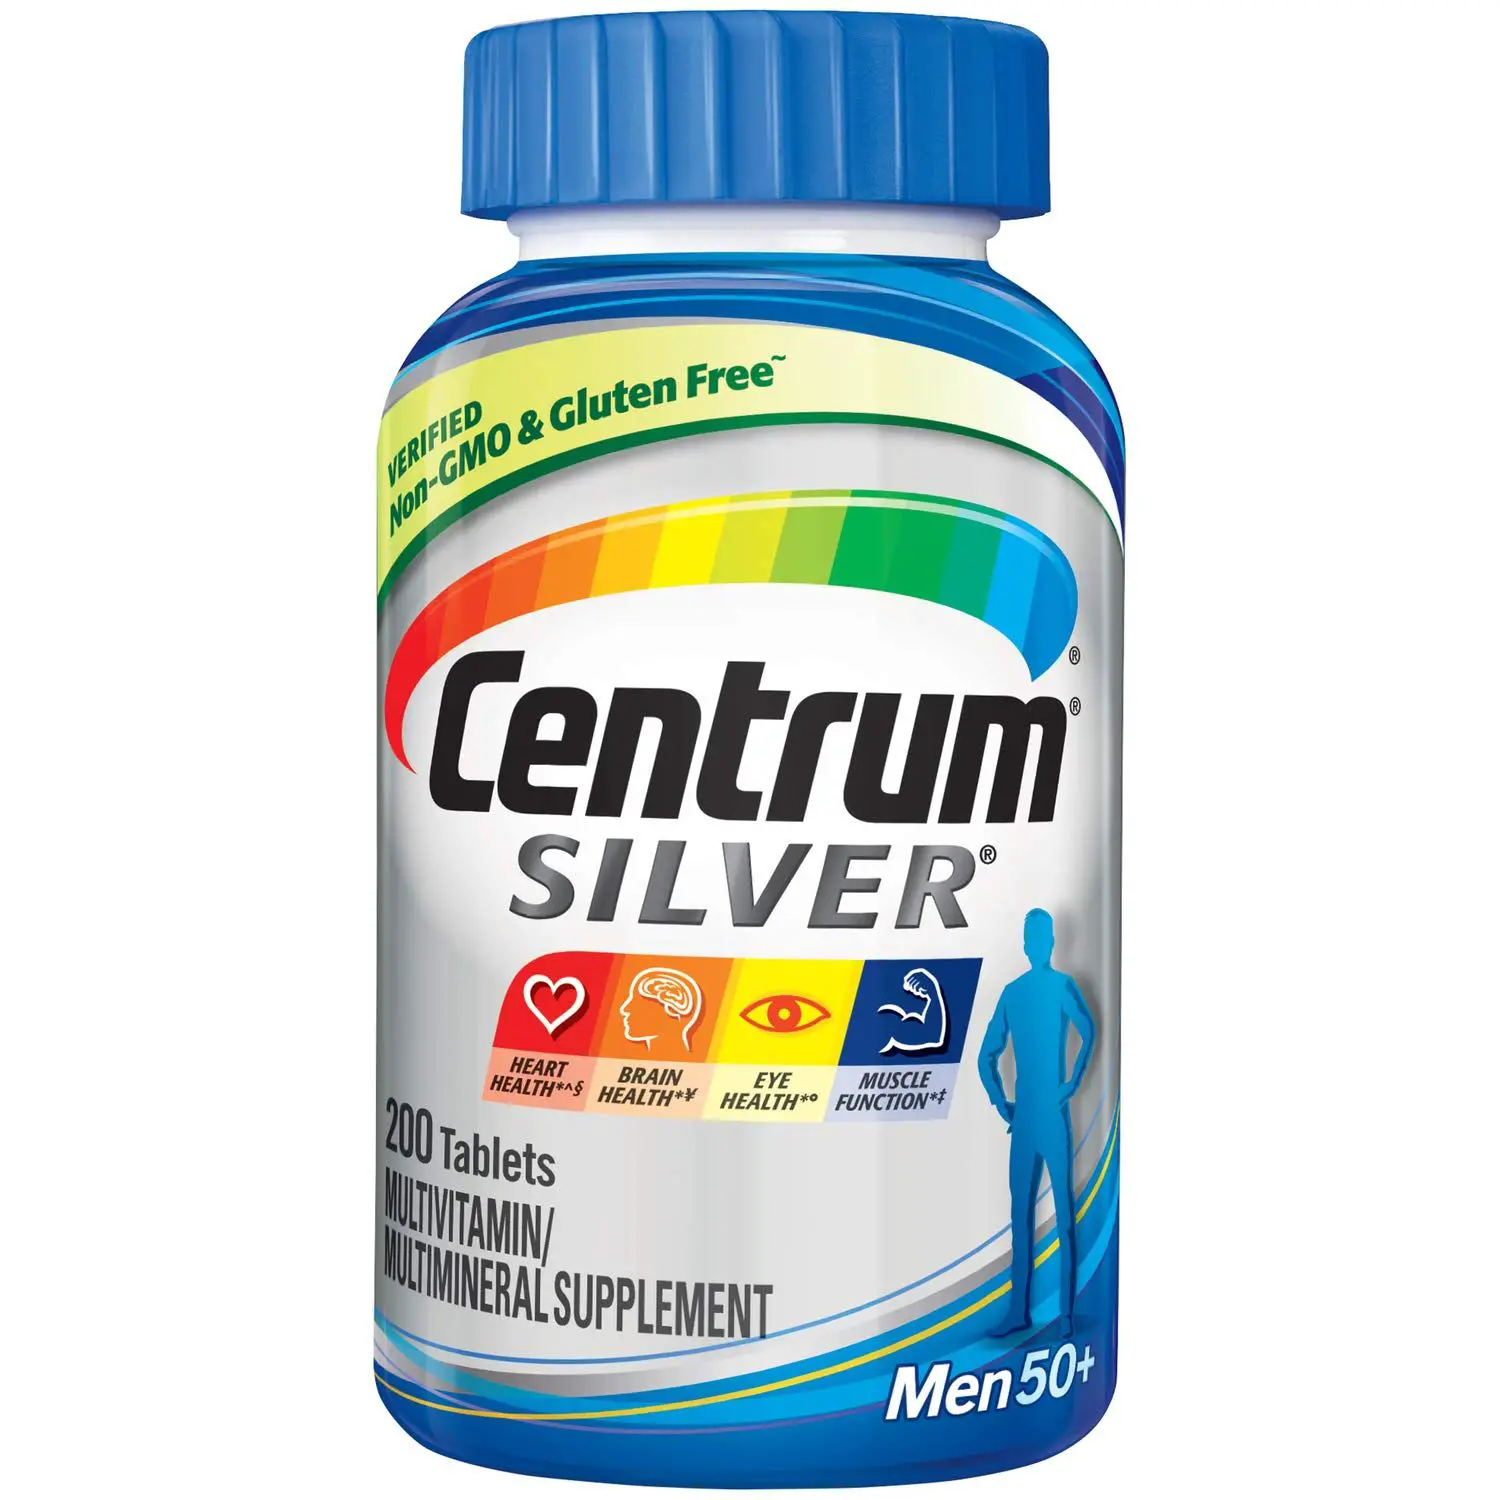 Centrum Multivitamin Multimineral Supplement Vitamin in 2020